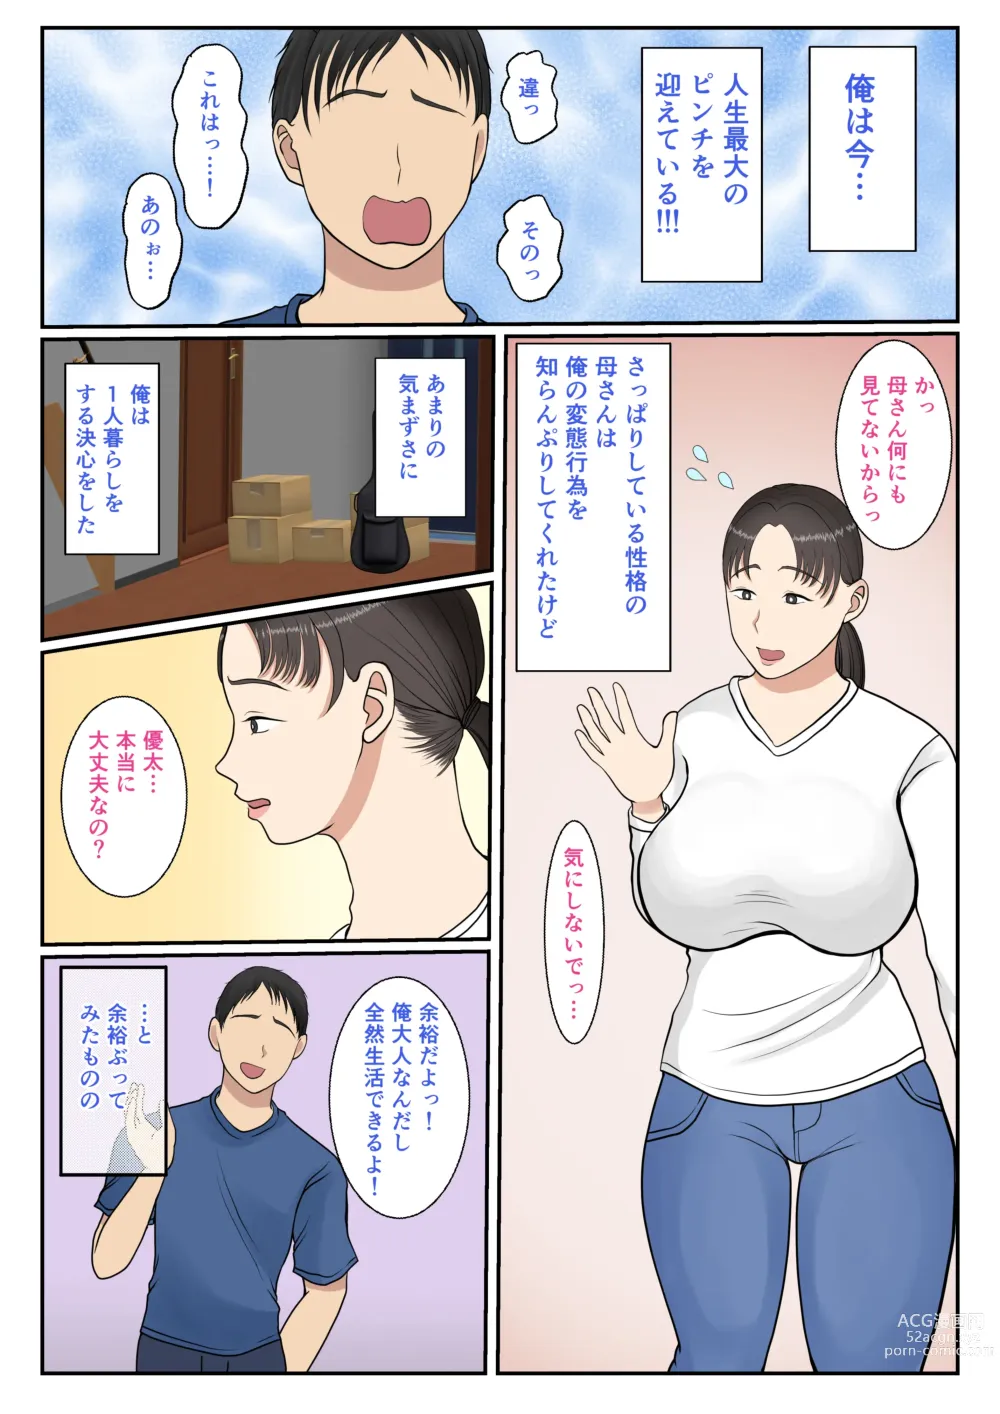 Page 3 of doujinshi Kaseifu Yondara Haha ga Kita